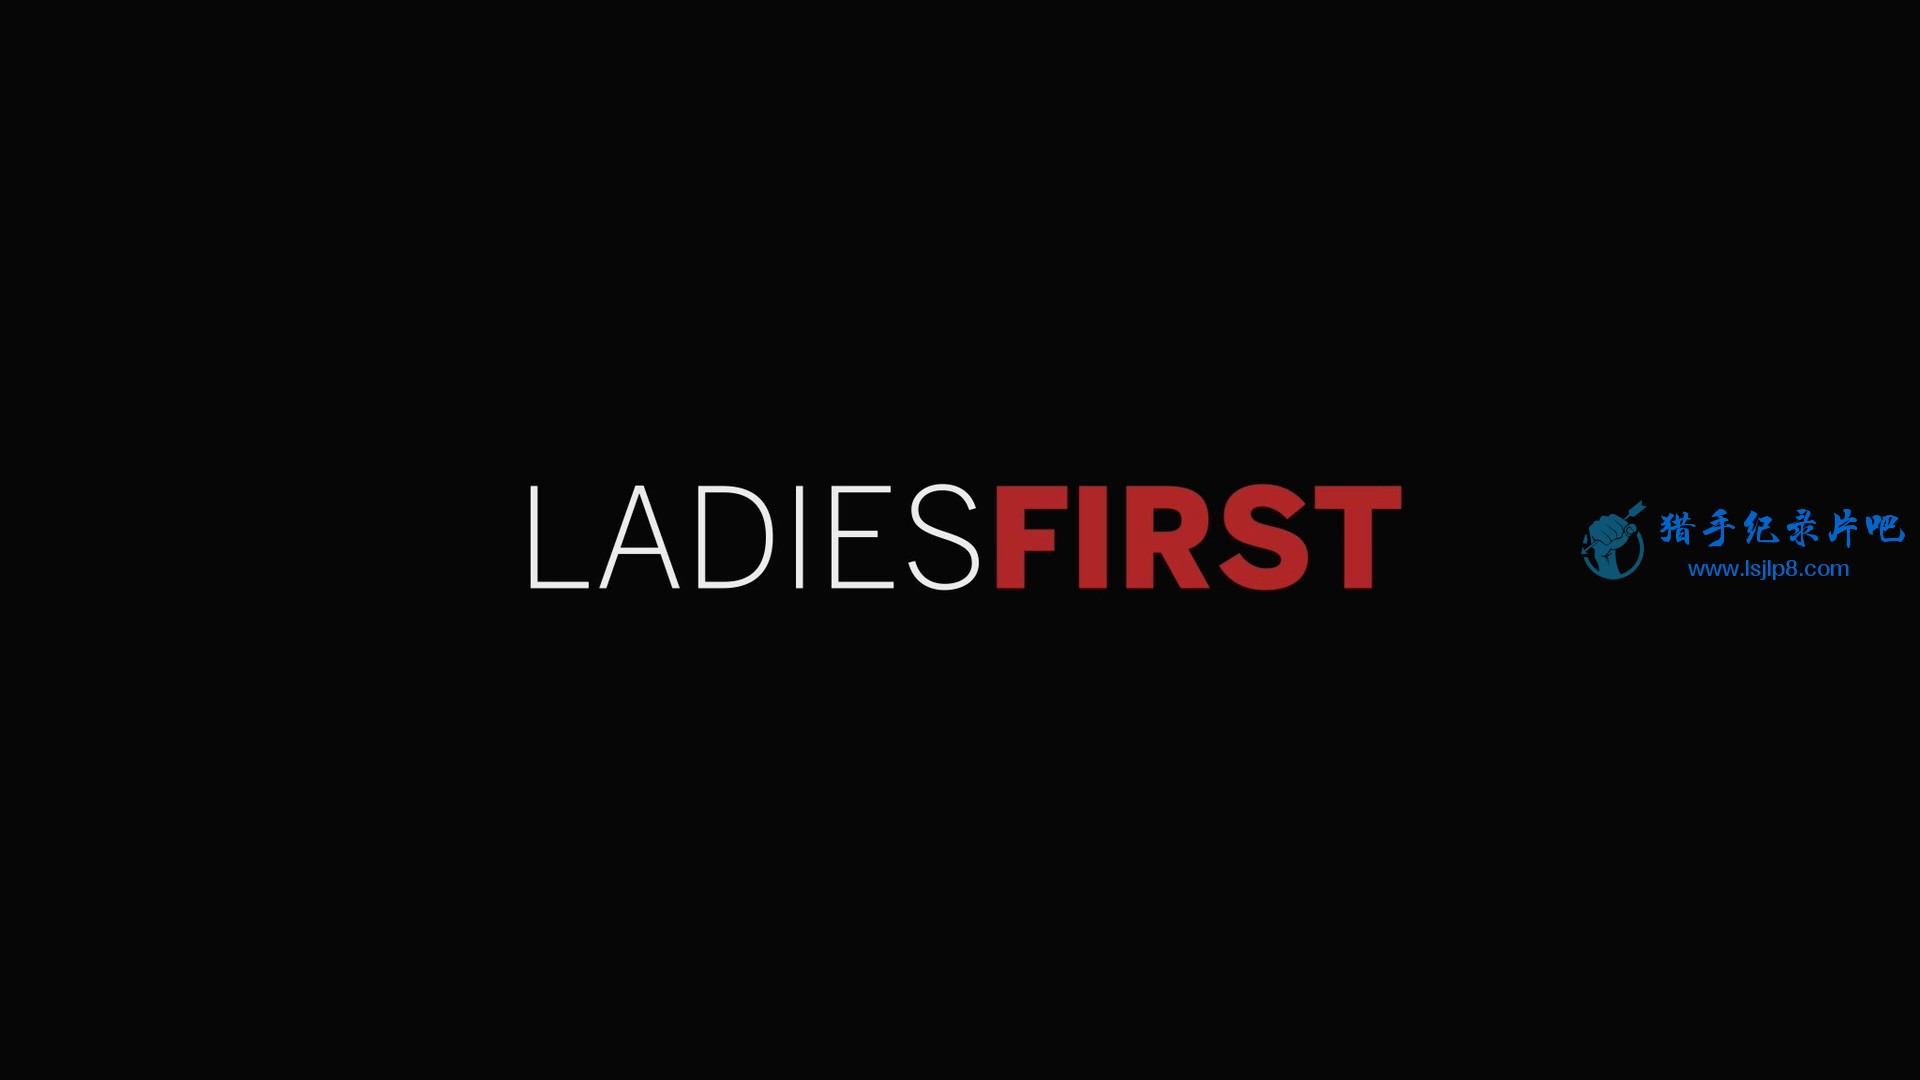 Ladies.First.2018.1080p.NF.WEB-DL.DD5.1.x264-NTG.mkv_20200721_101426.280.jpg